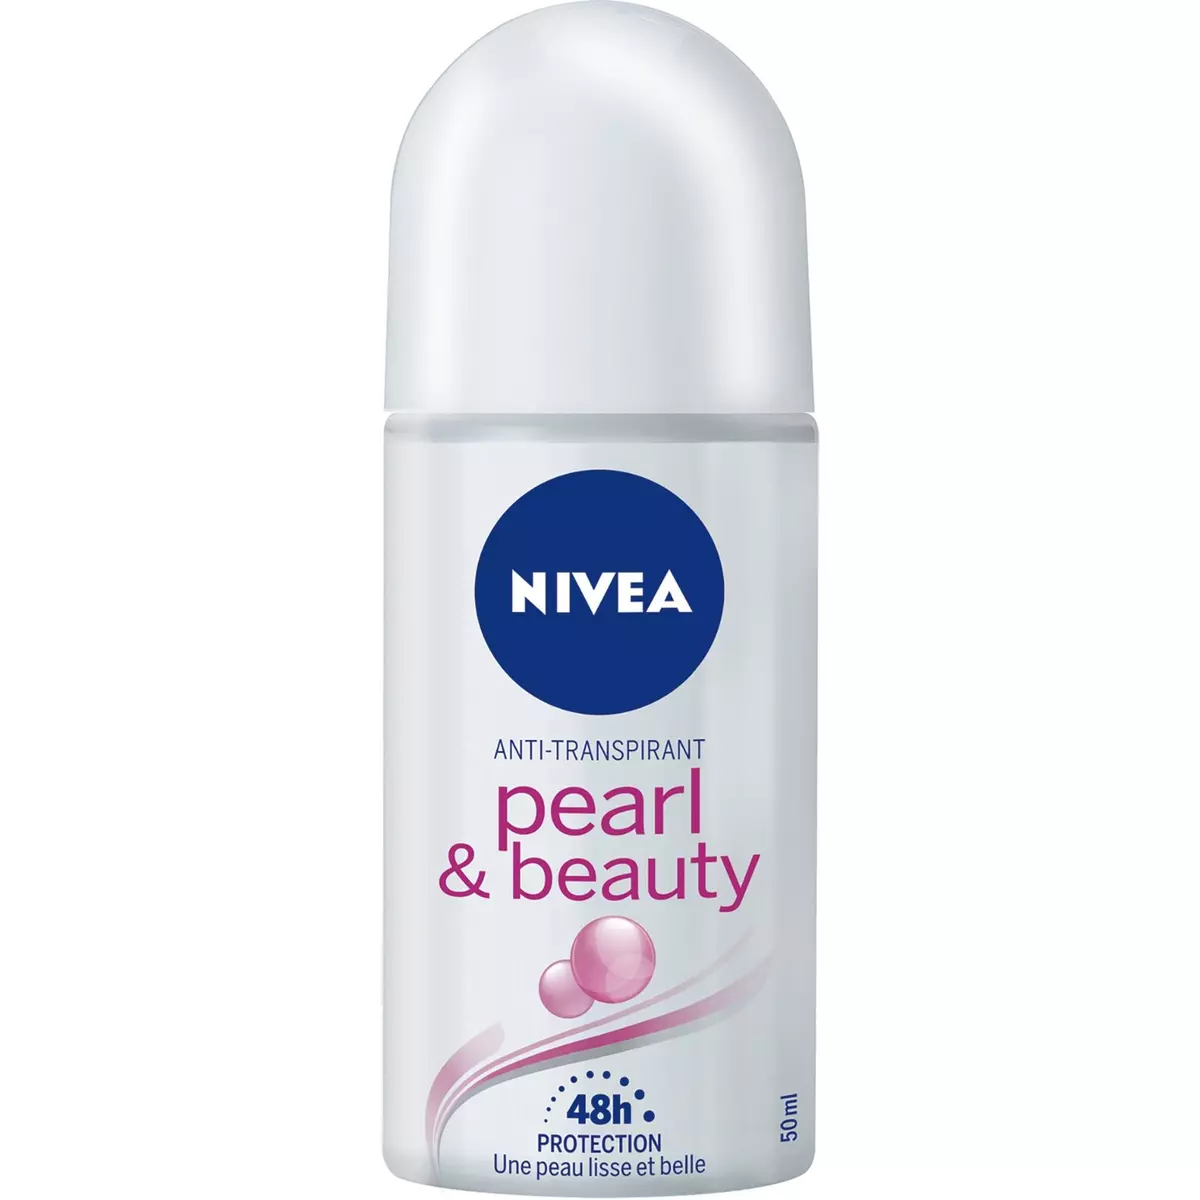 NIVEA Déodorant bille anti-transpirant pearl & beauty 50ml